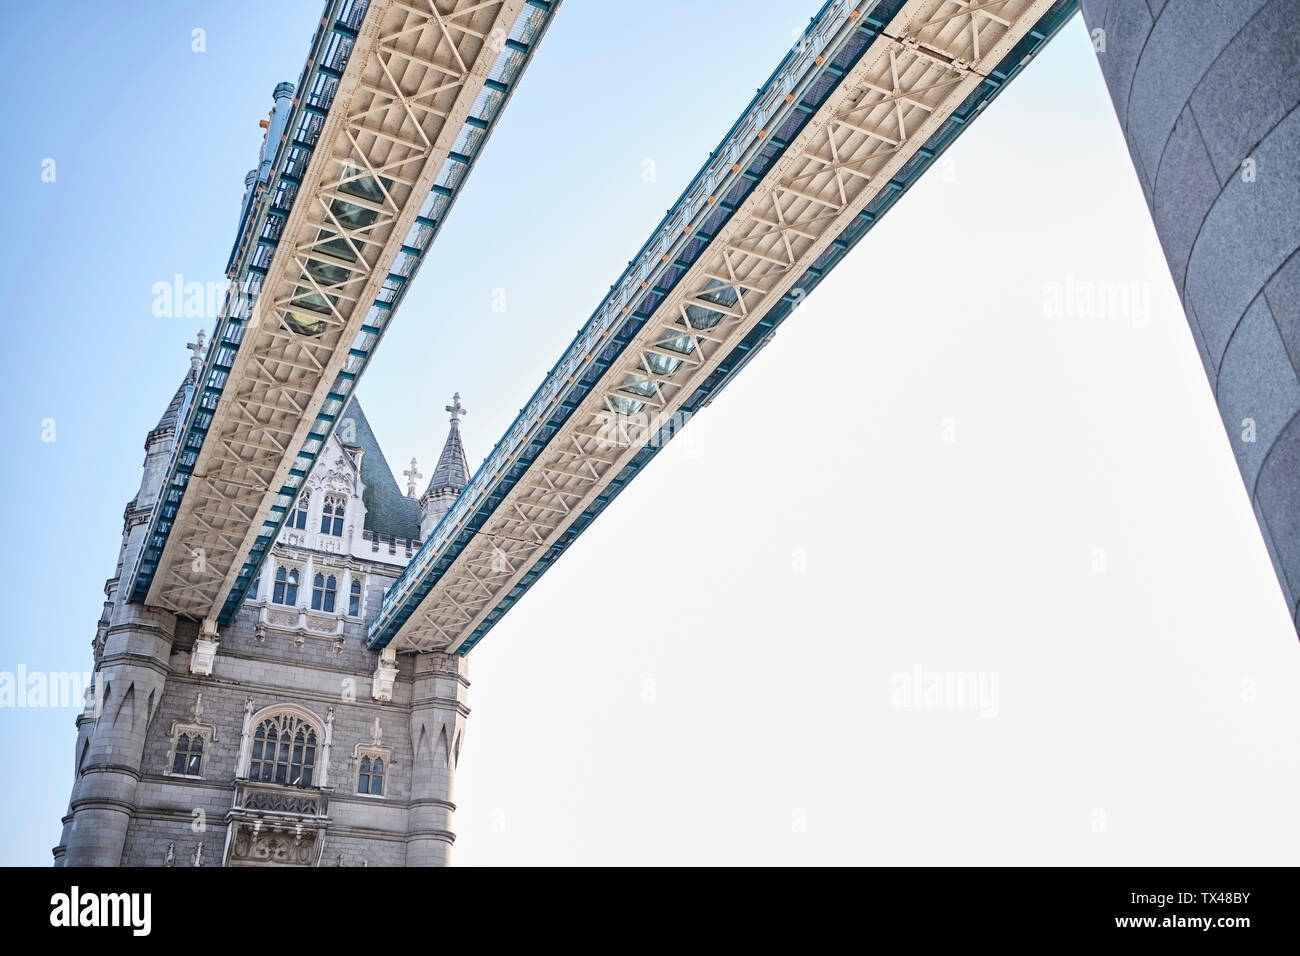 UK, London, detail of the Tower Bridge Stock Photo